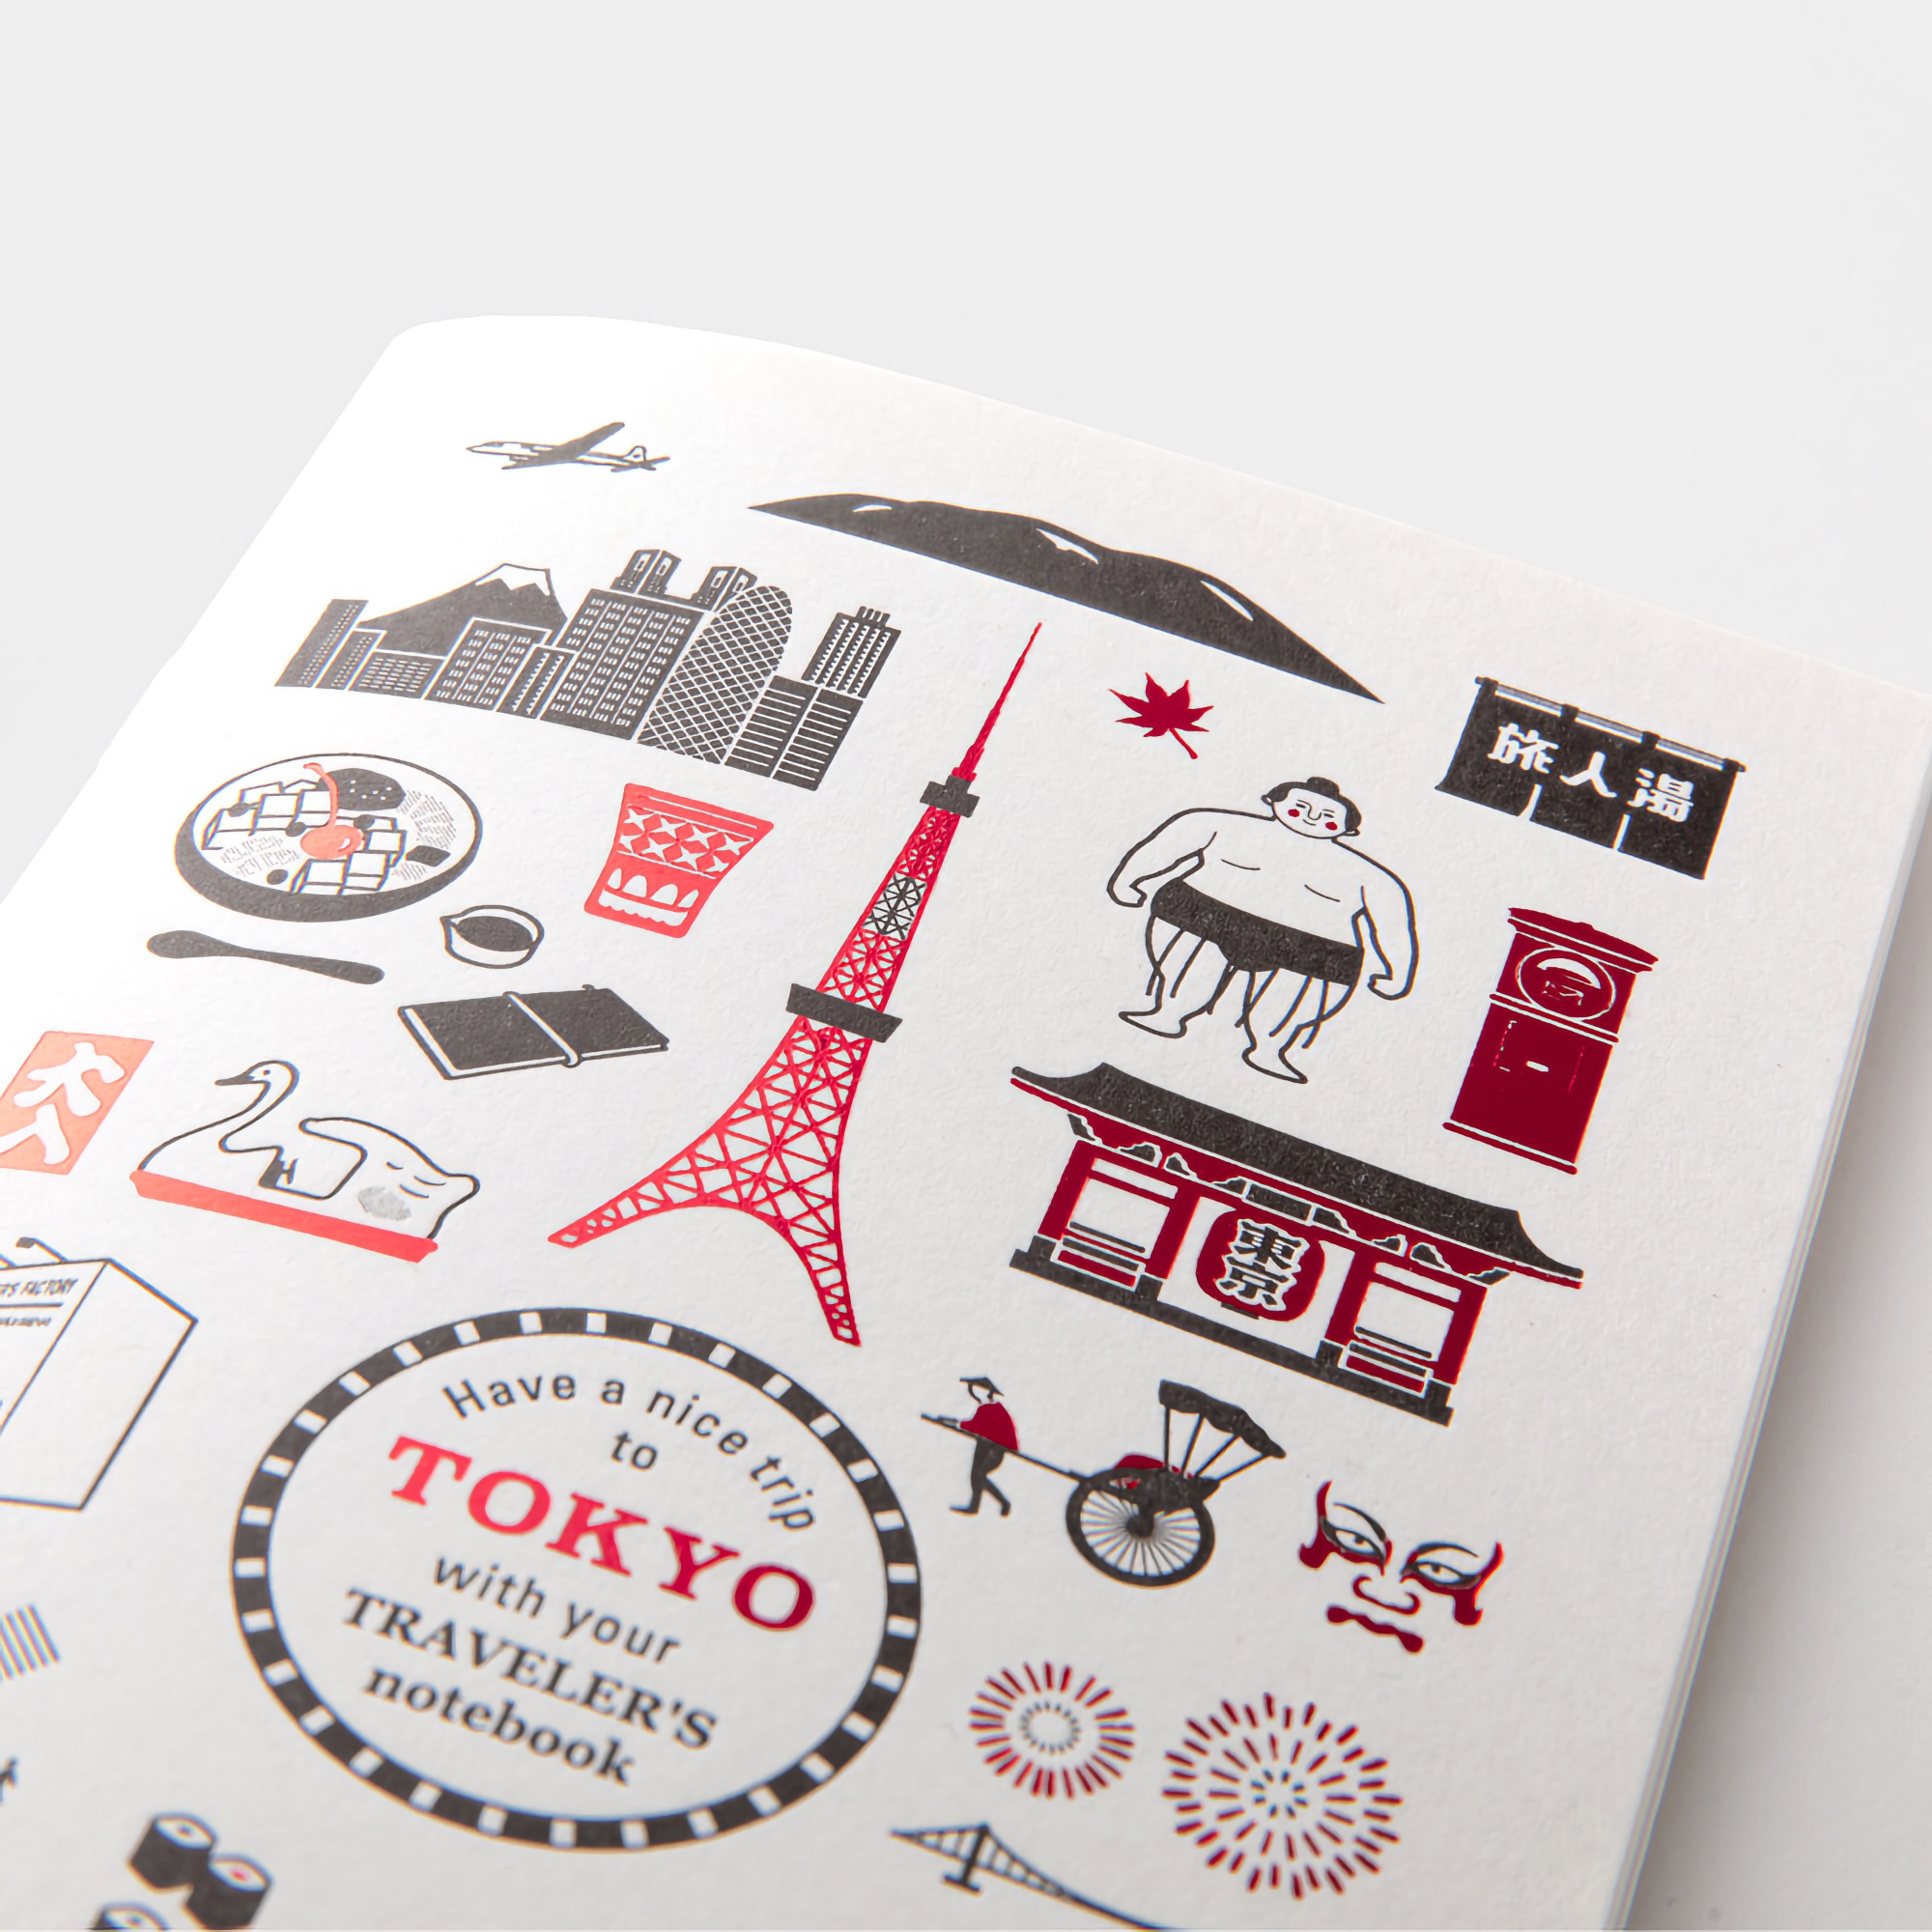 Traveler’s Company Traveler's notebook - Tokyo Edition Limited Blank Notebook, Regular Size